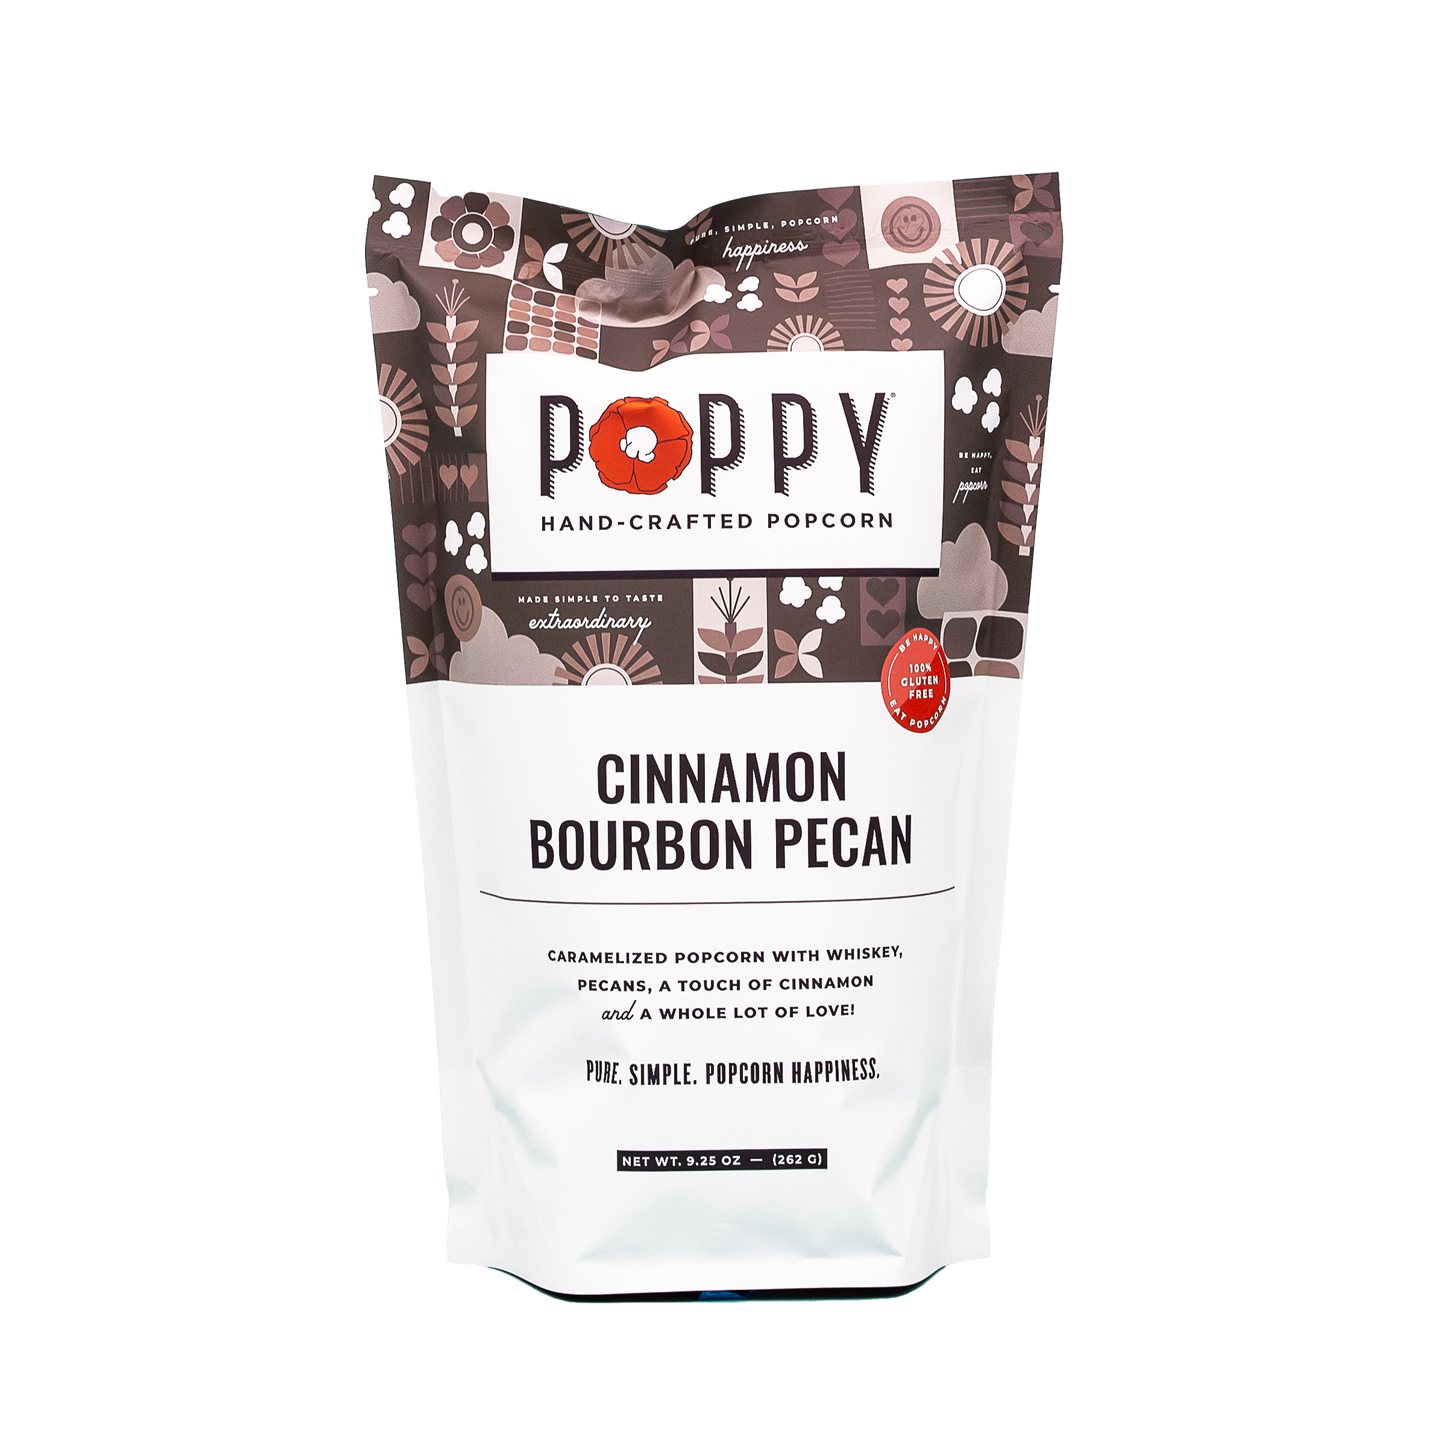 Cinnamon Bourbon Pecan Market Bag Case